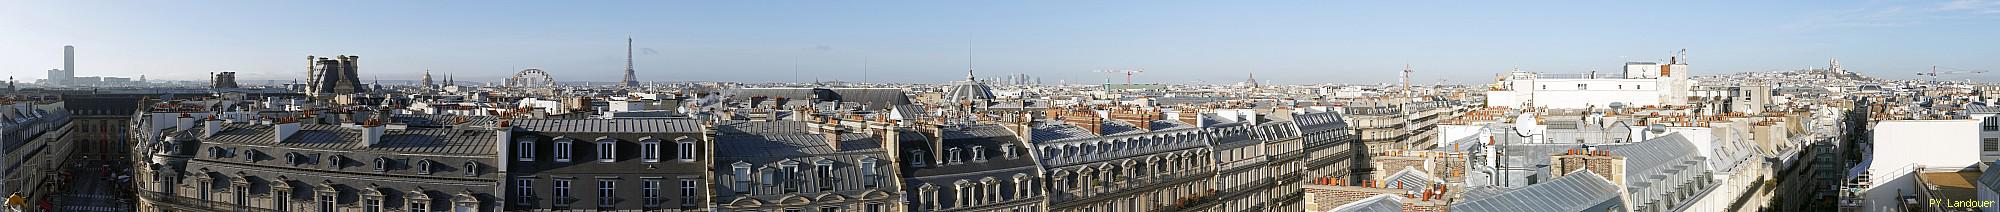 Paris vu d'en haut,  12 avenue de l'Opra